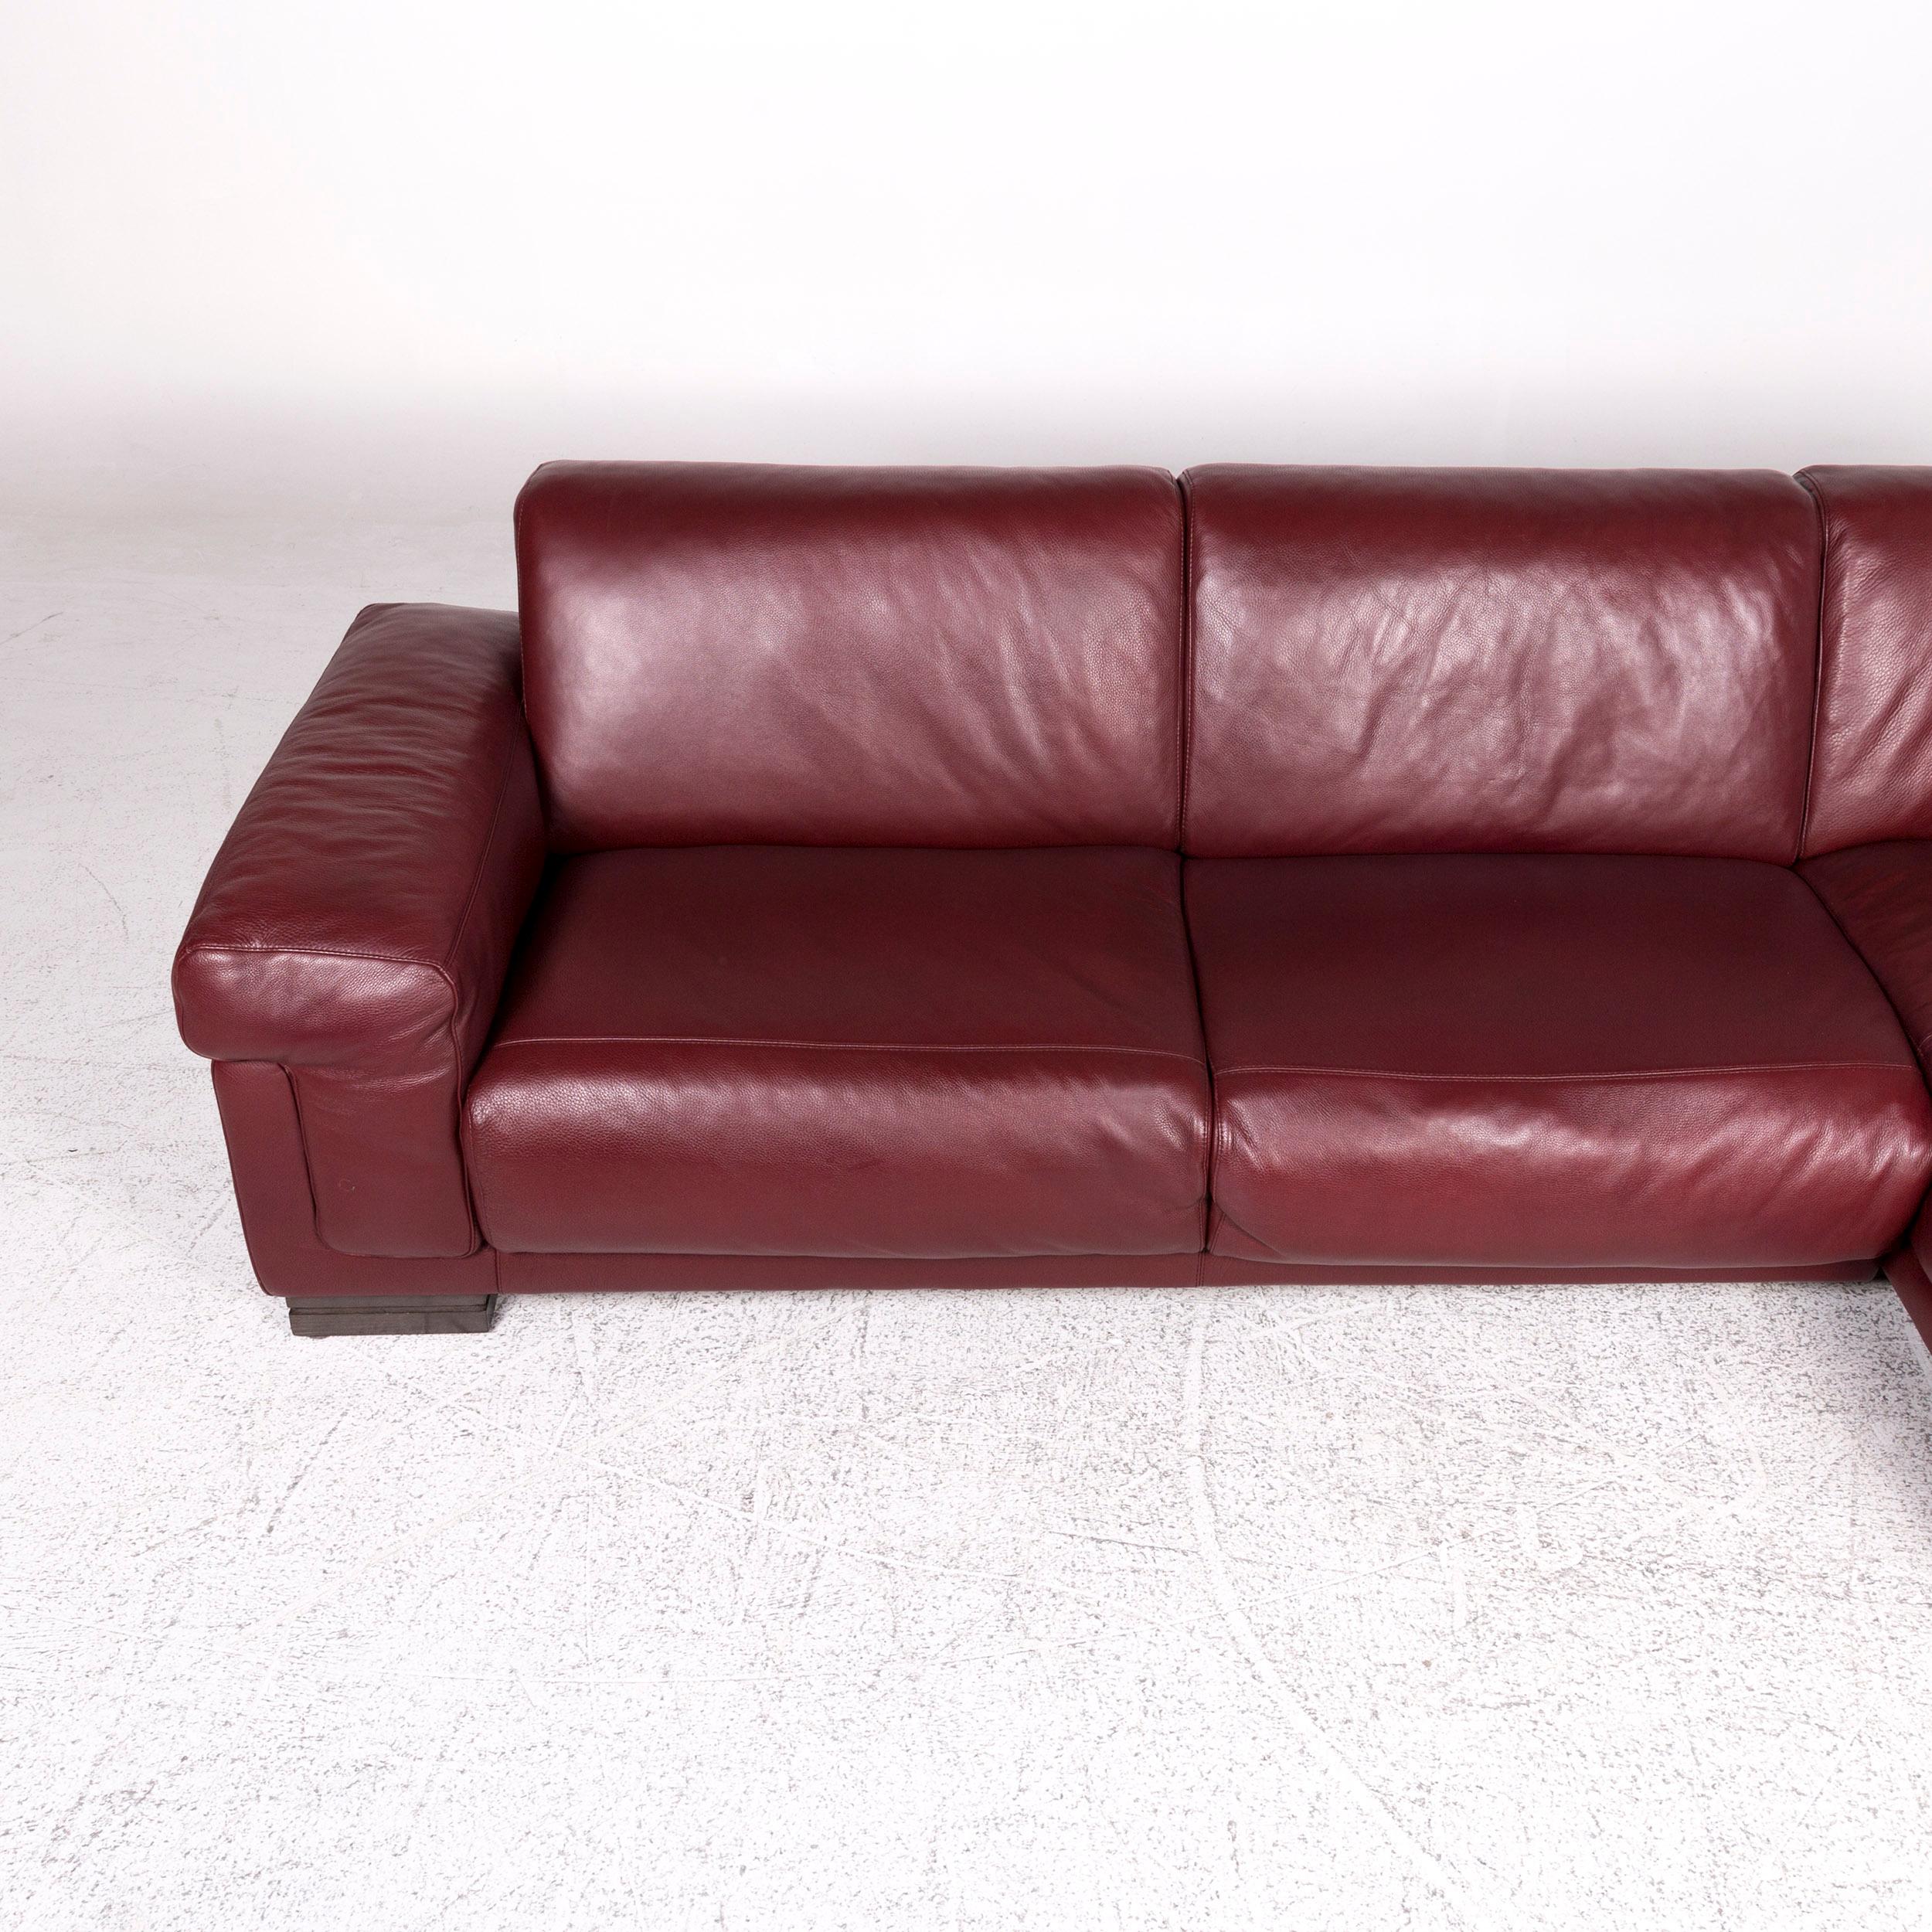 Natuzzi Leather Corner Sofa Bordeaux Red Sofa Couch For Sale 1